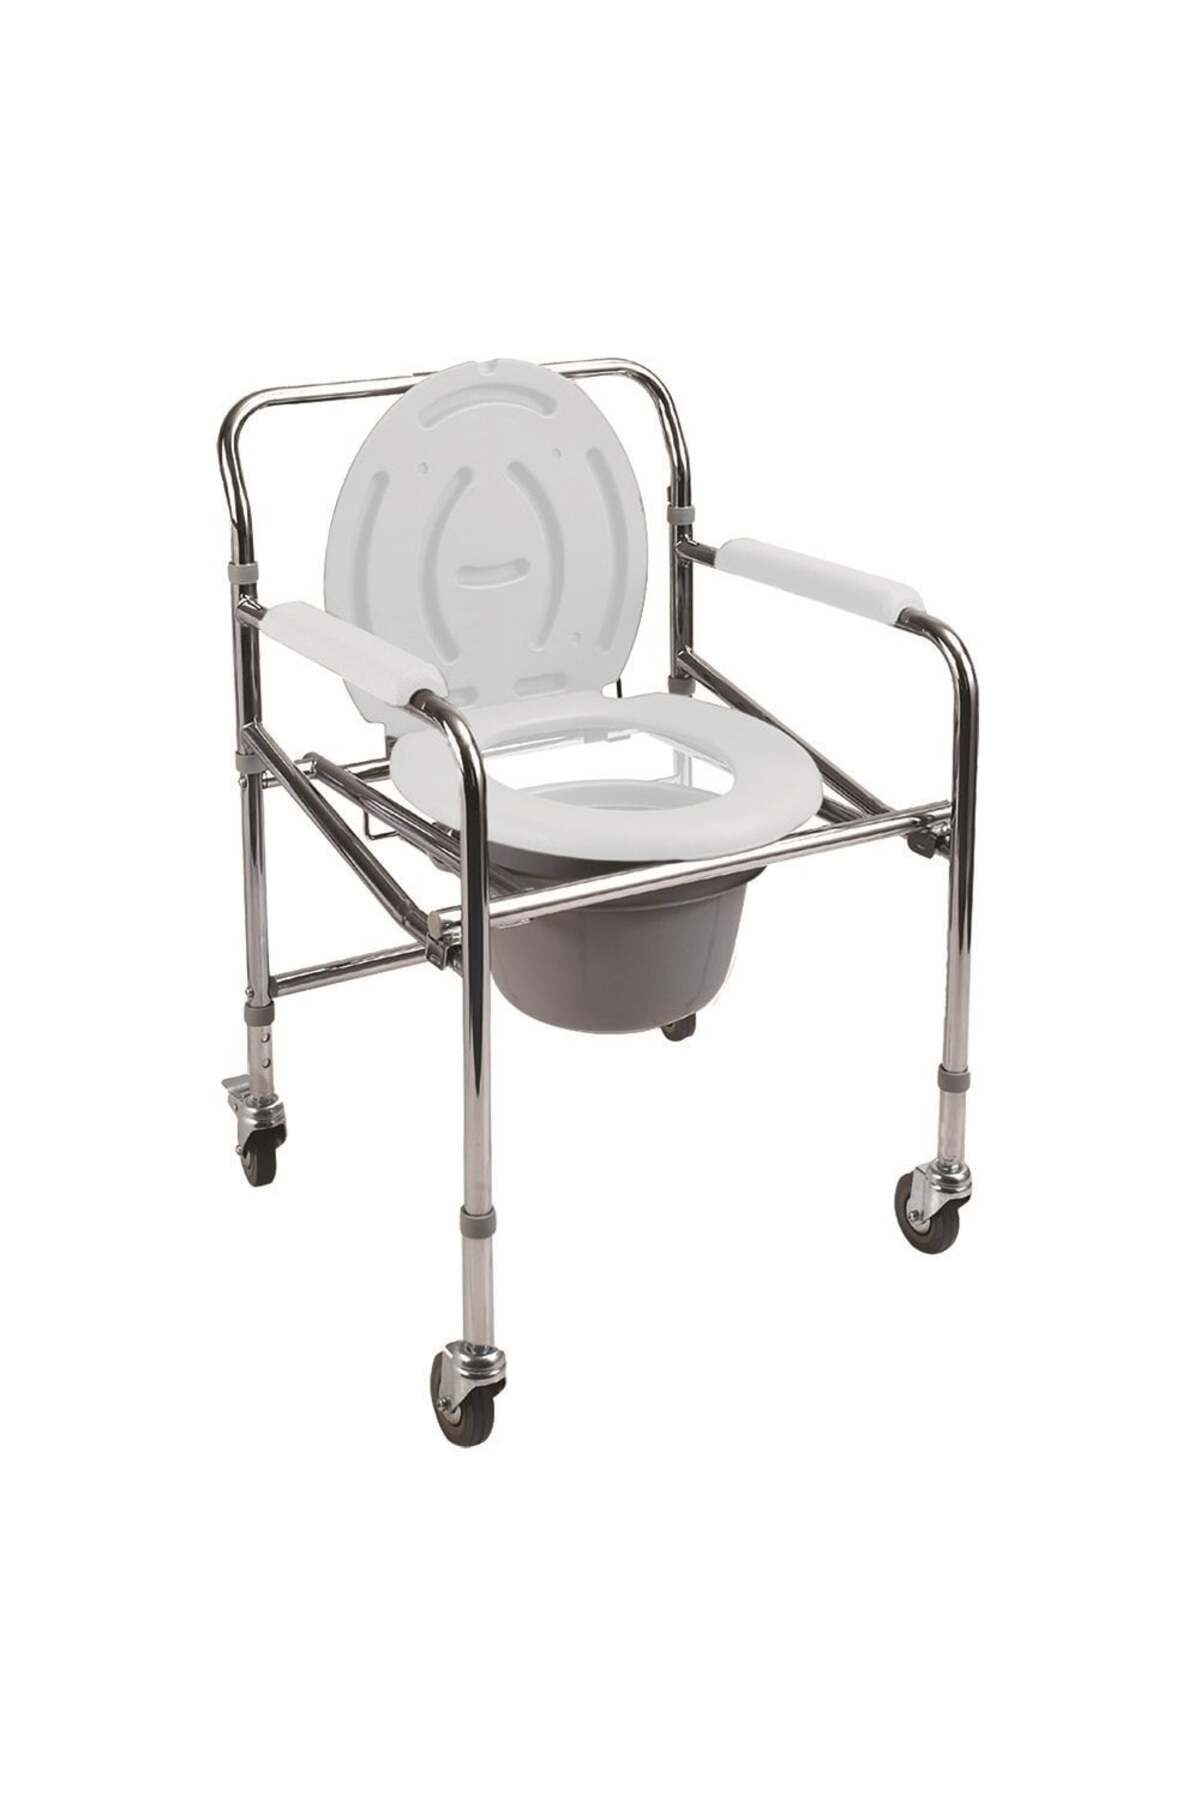 Genel Markalar Poylin P561 Komot Klozetli Tekerlekli Banyo Tuvalet Sandalyesi